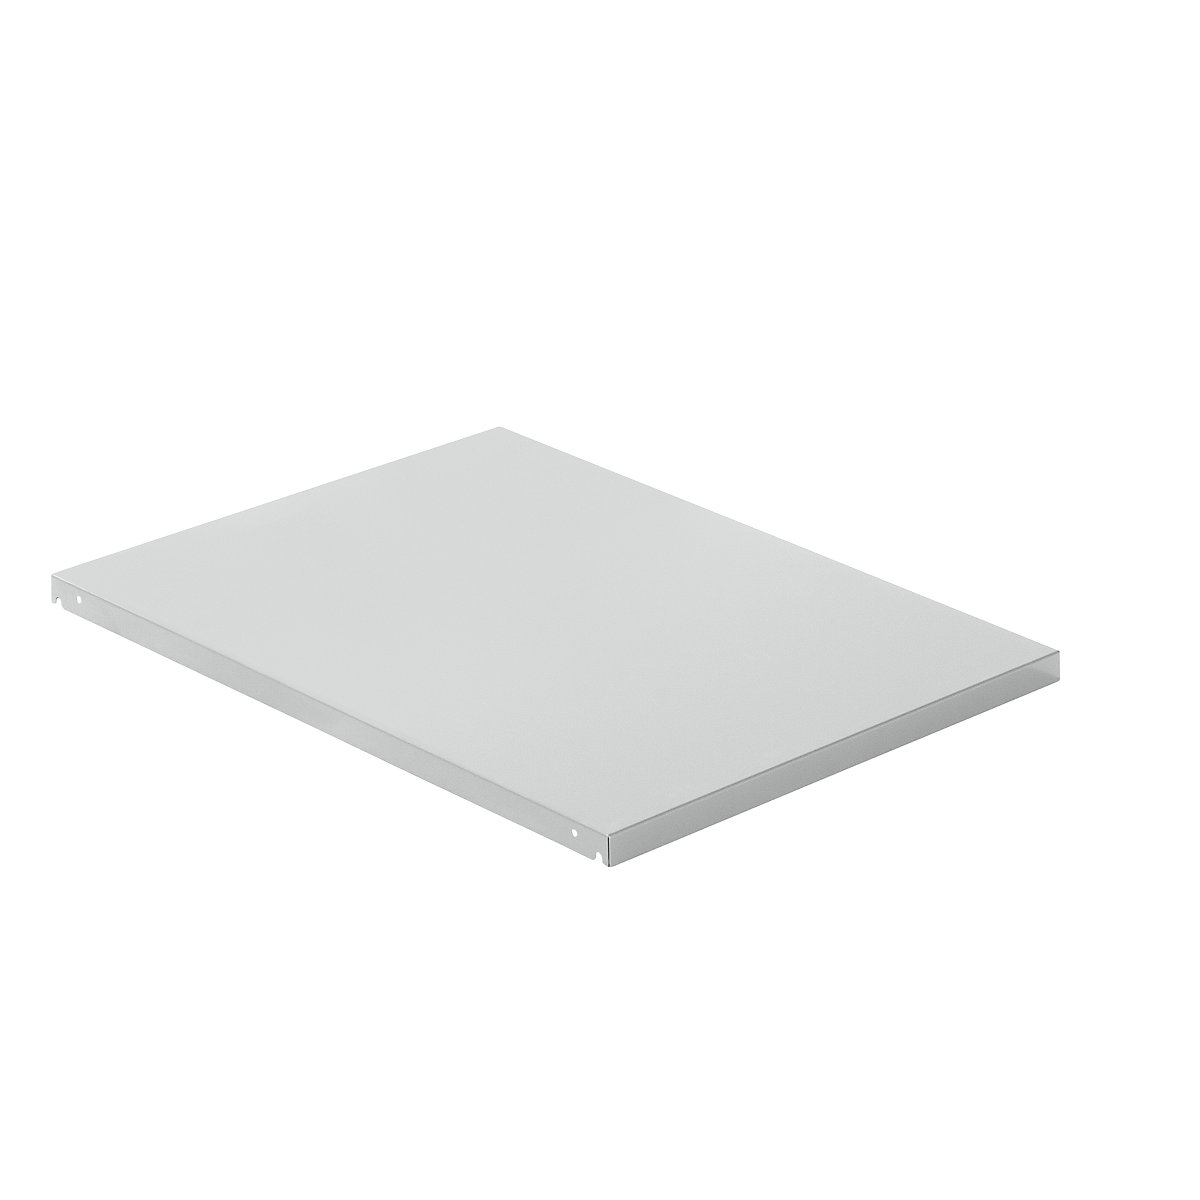 Sheet steel top shelf – LISTA, WxD 890 x 1260 mm, max. shelf load 100 kg, light grey